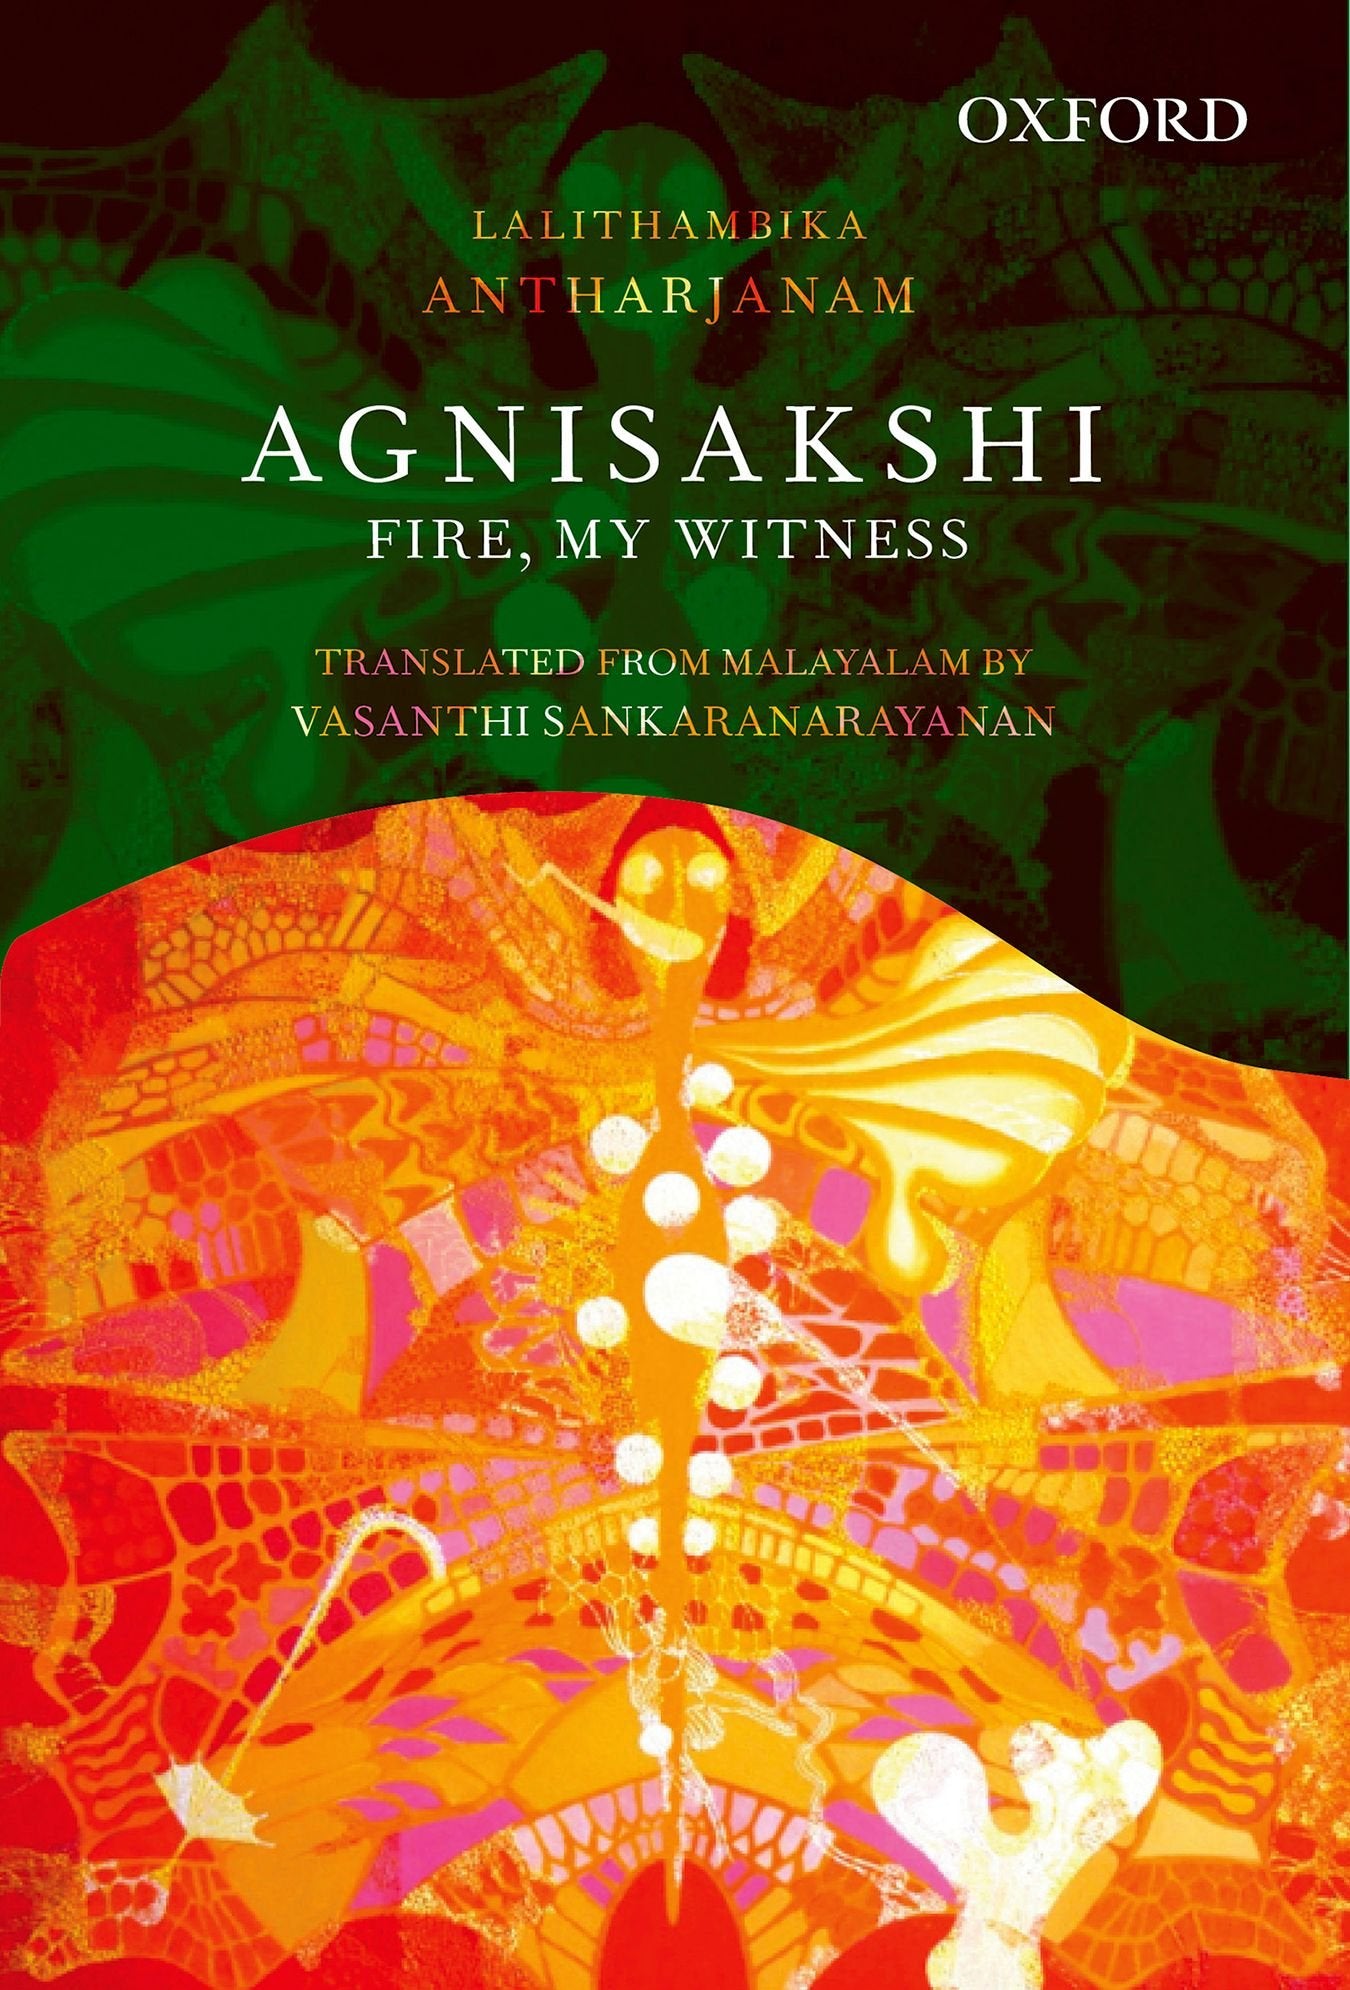 Agnisakshi: Fire, My Witness